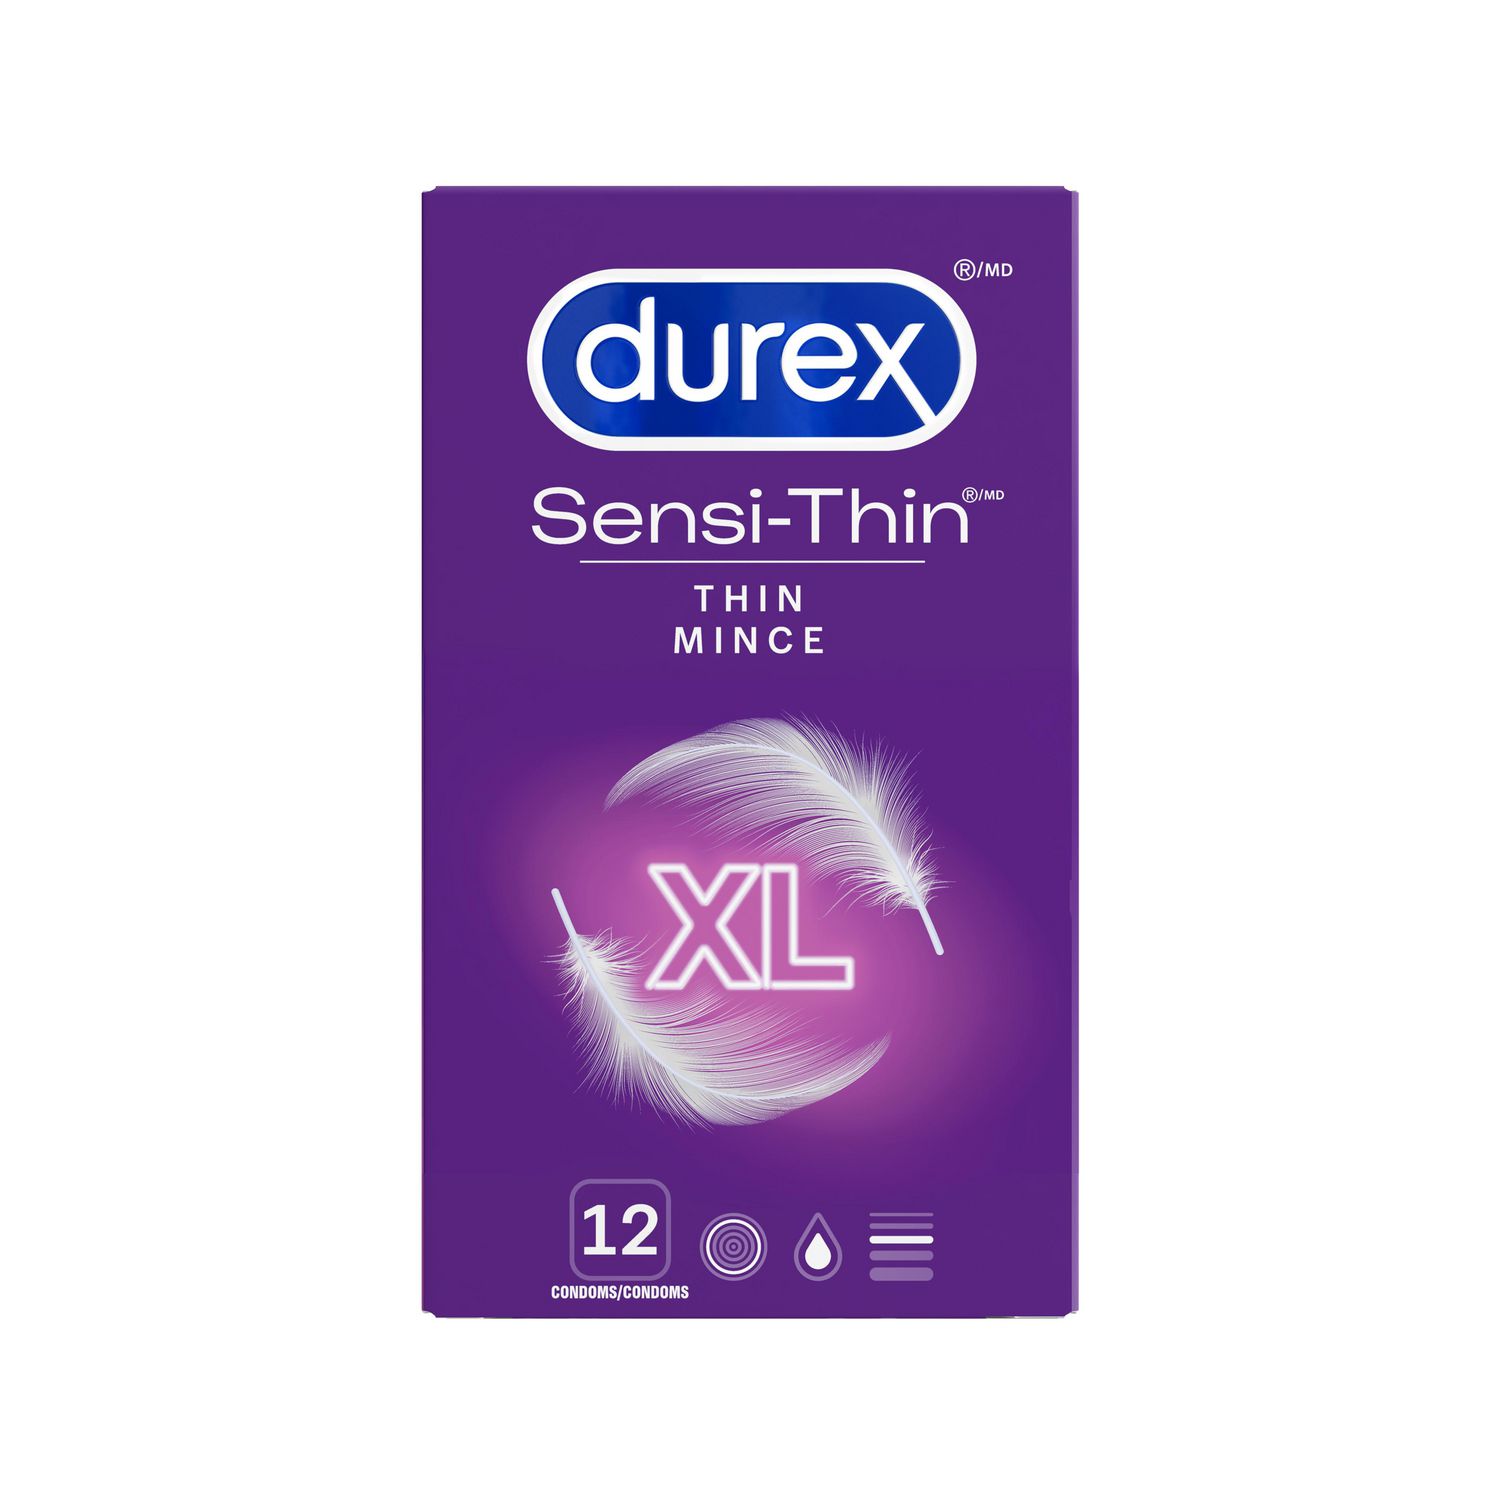 Durex Feel Thin XL - Condoms, 3 pcs